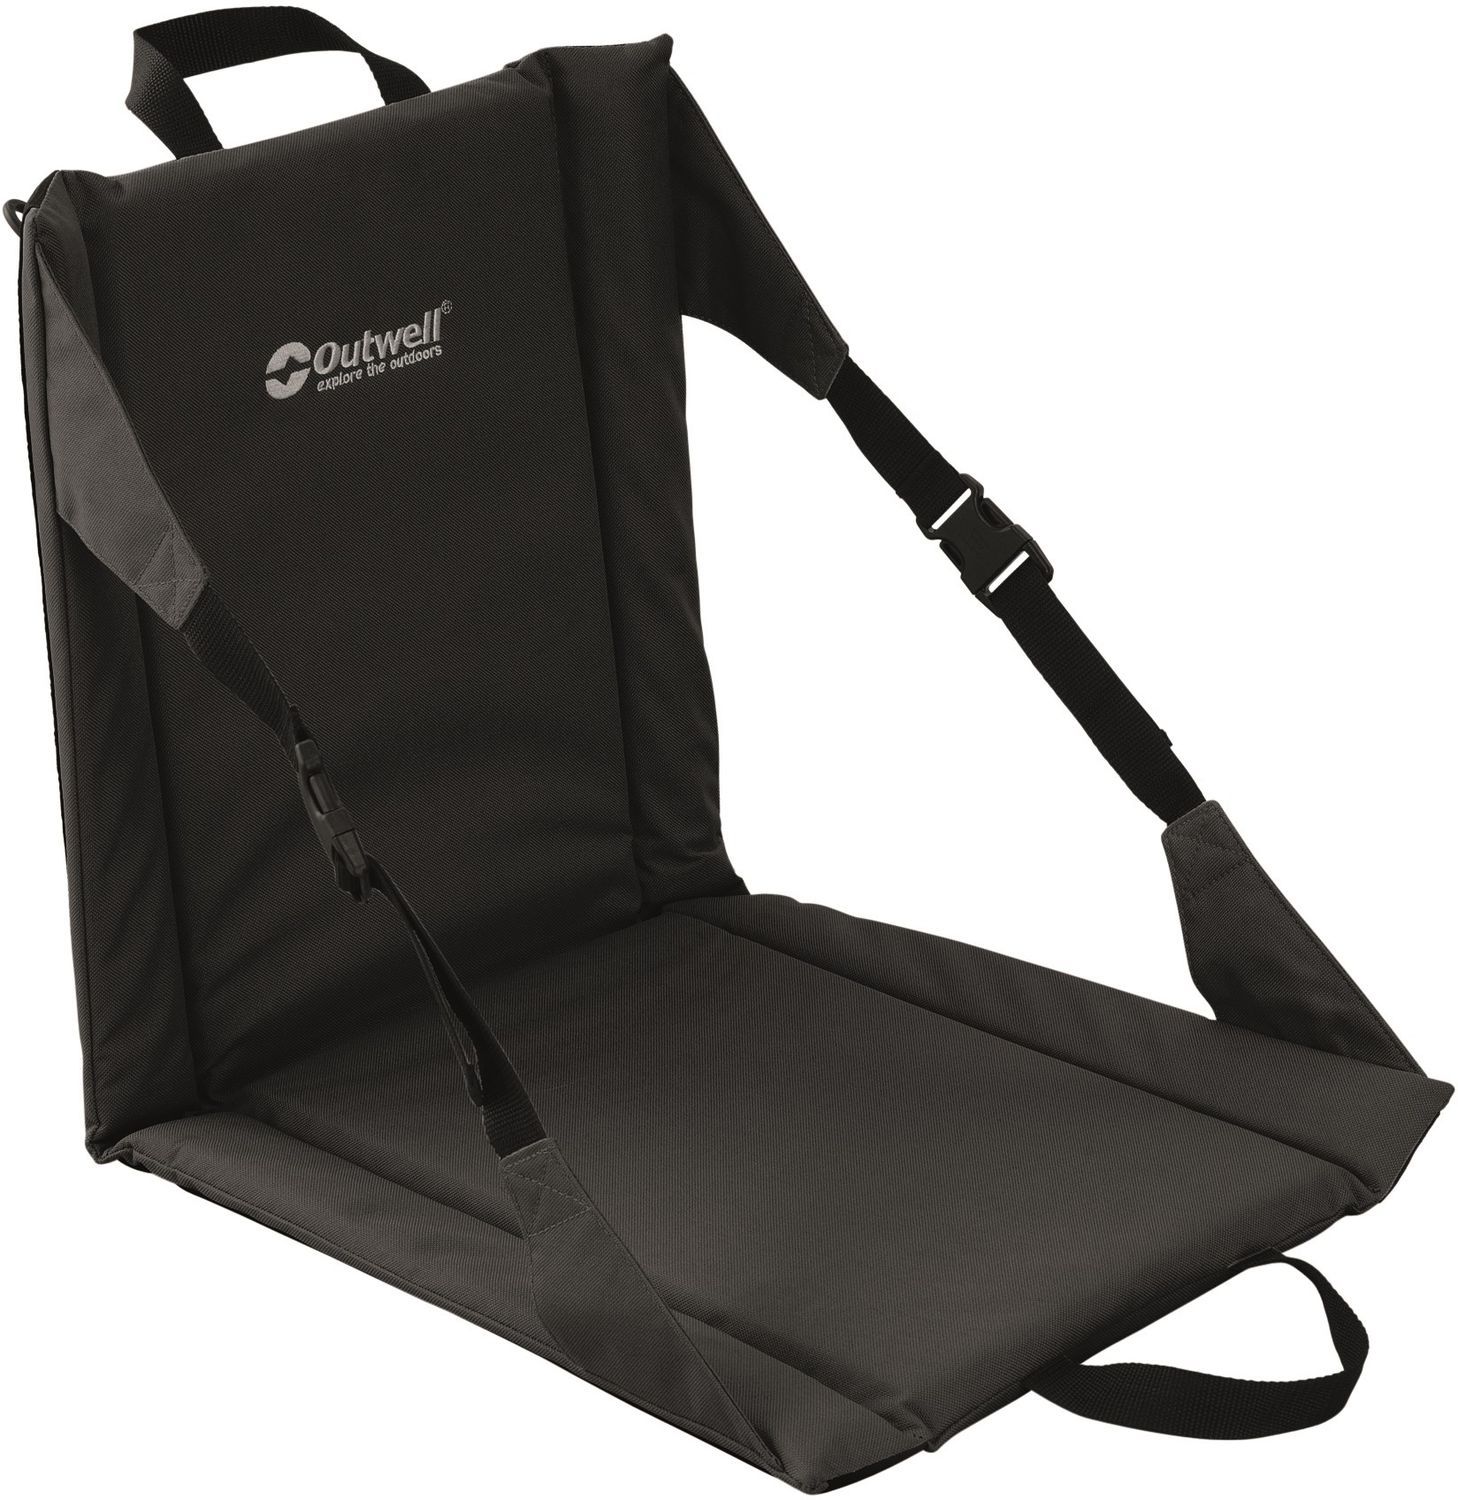 Outwell Cardiel Chair - Midnight Black